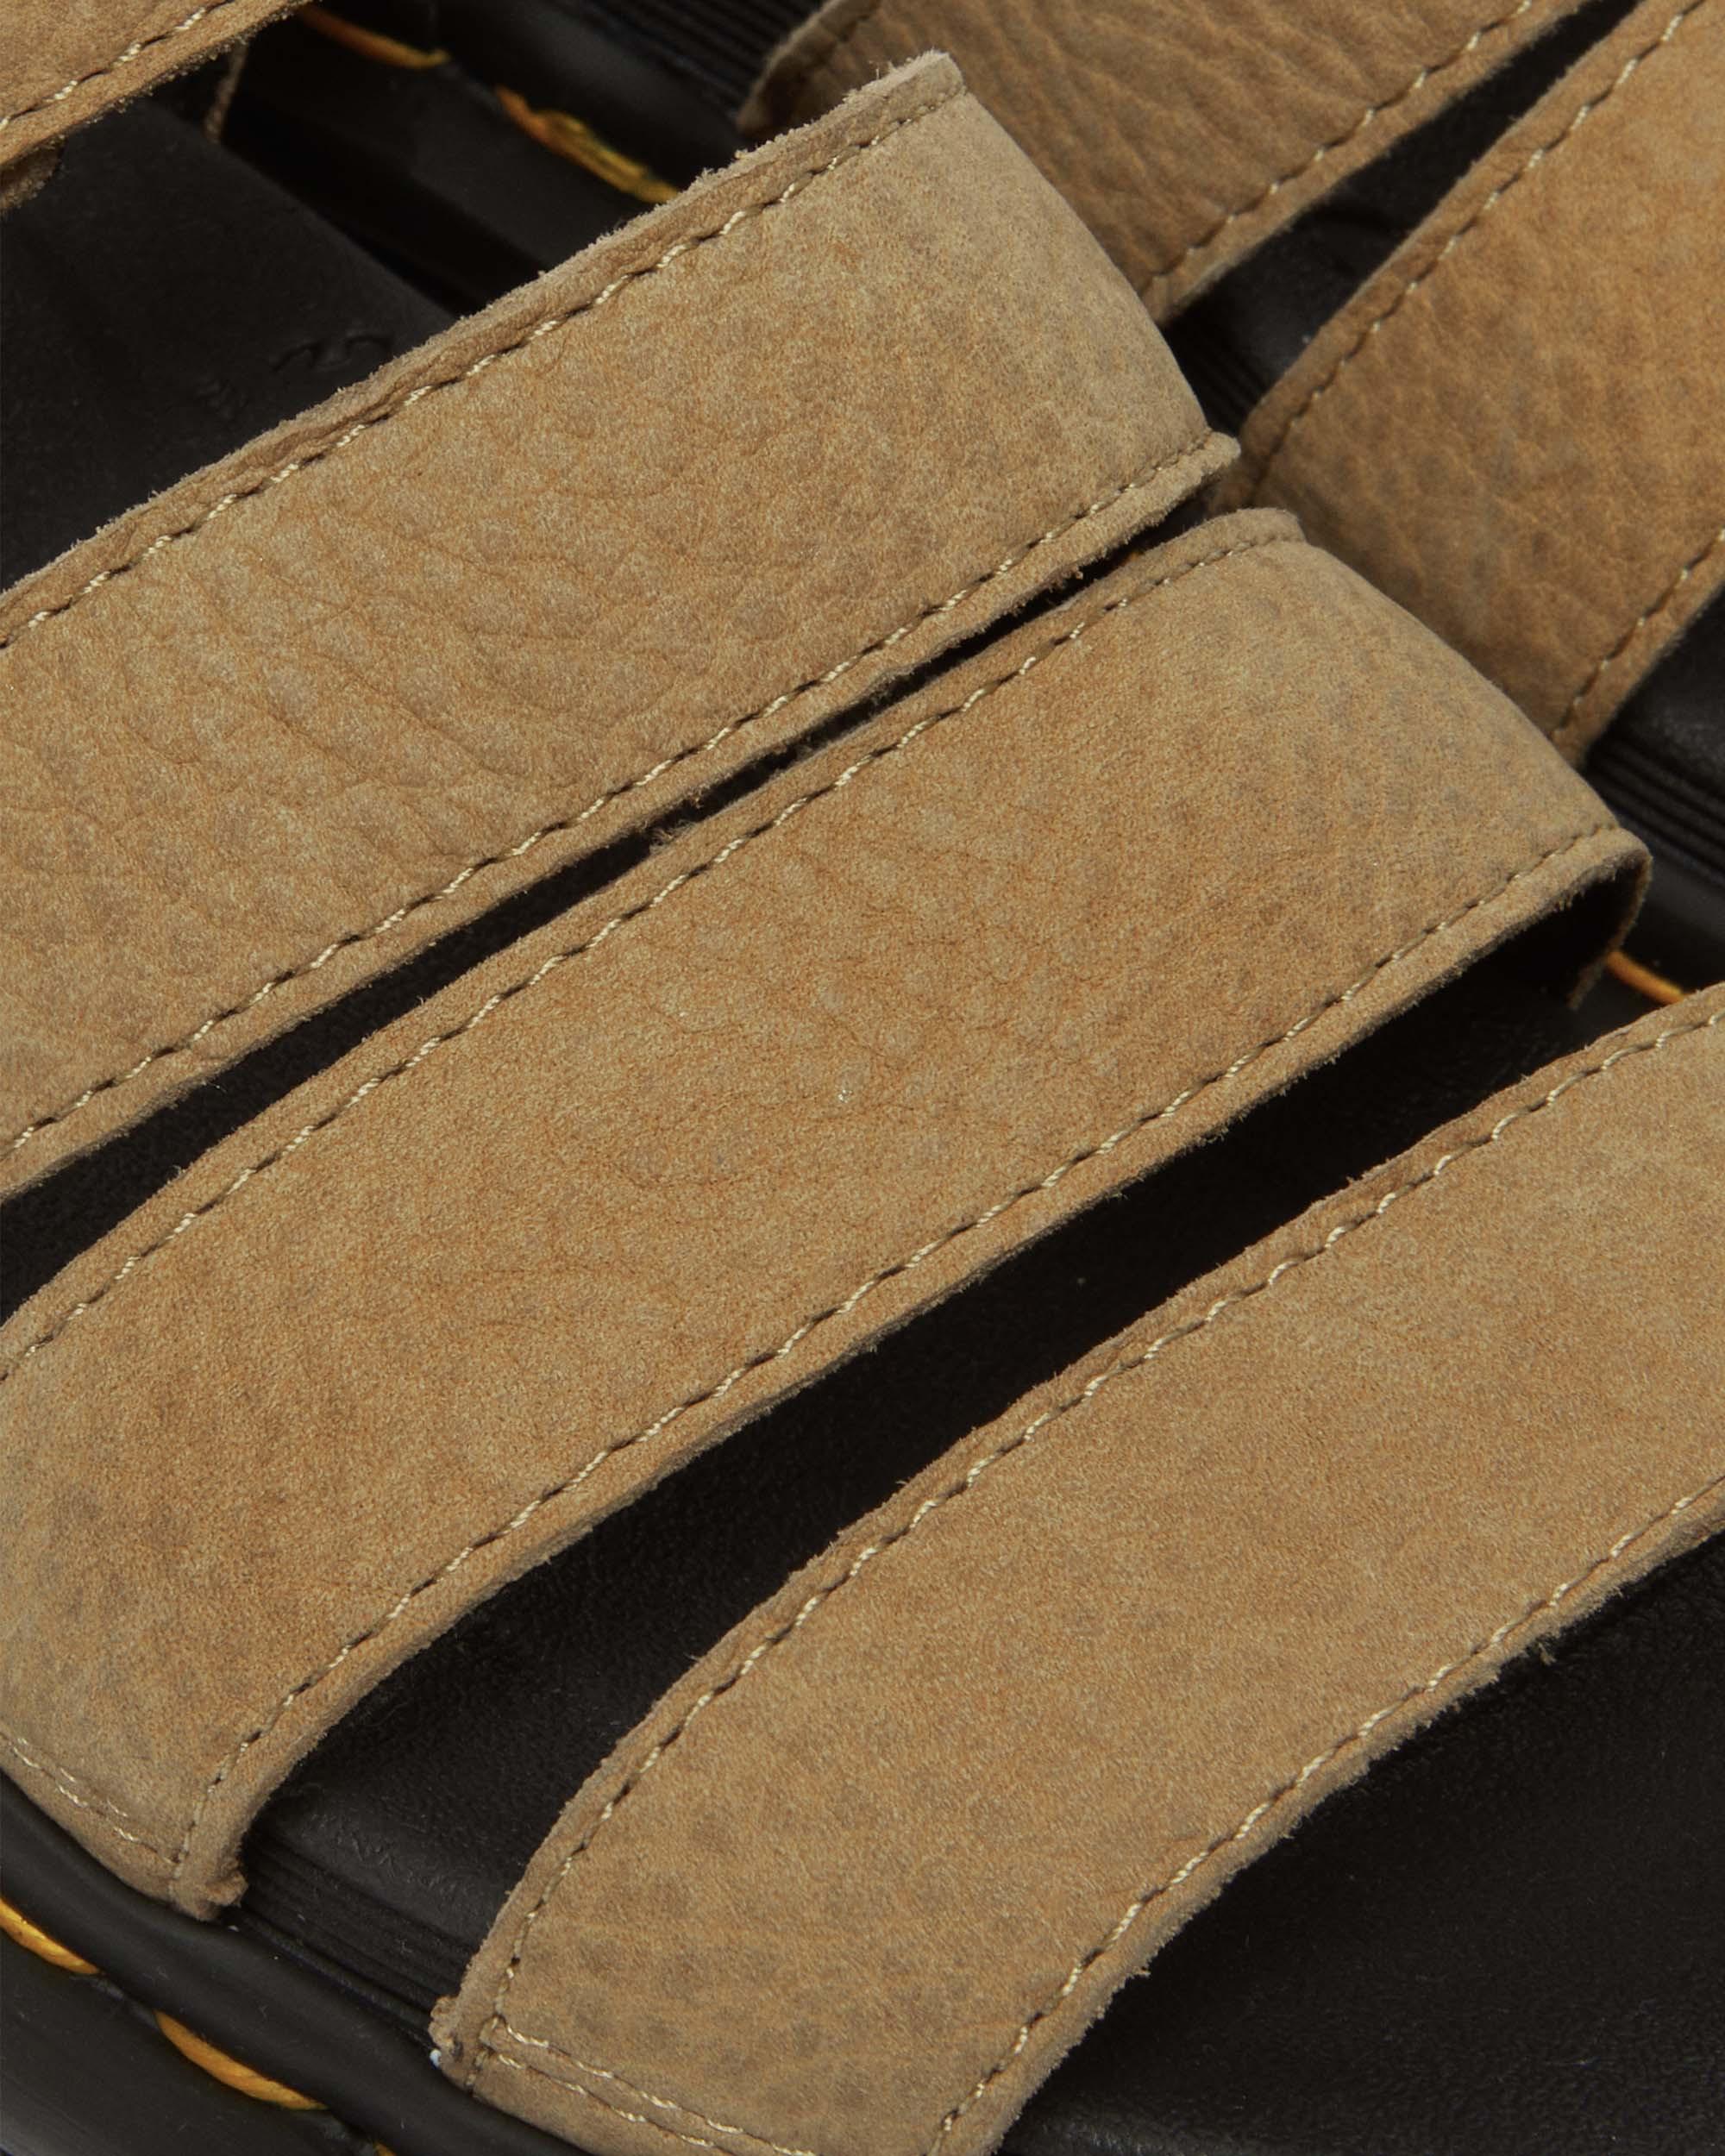 Blaire Tumbled Nubuck Leather Sandals in Savannah Tan